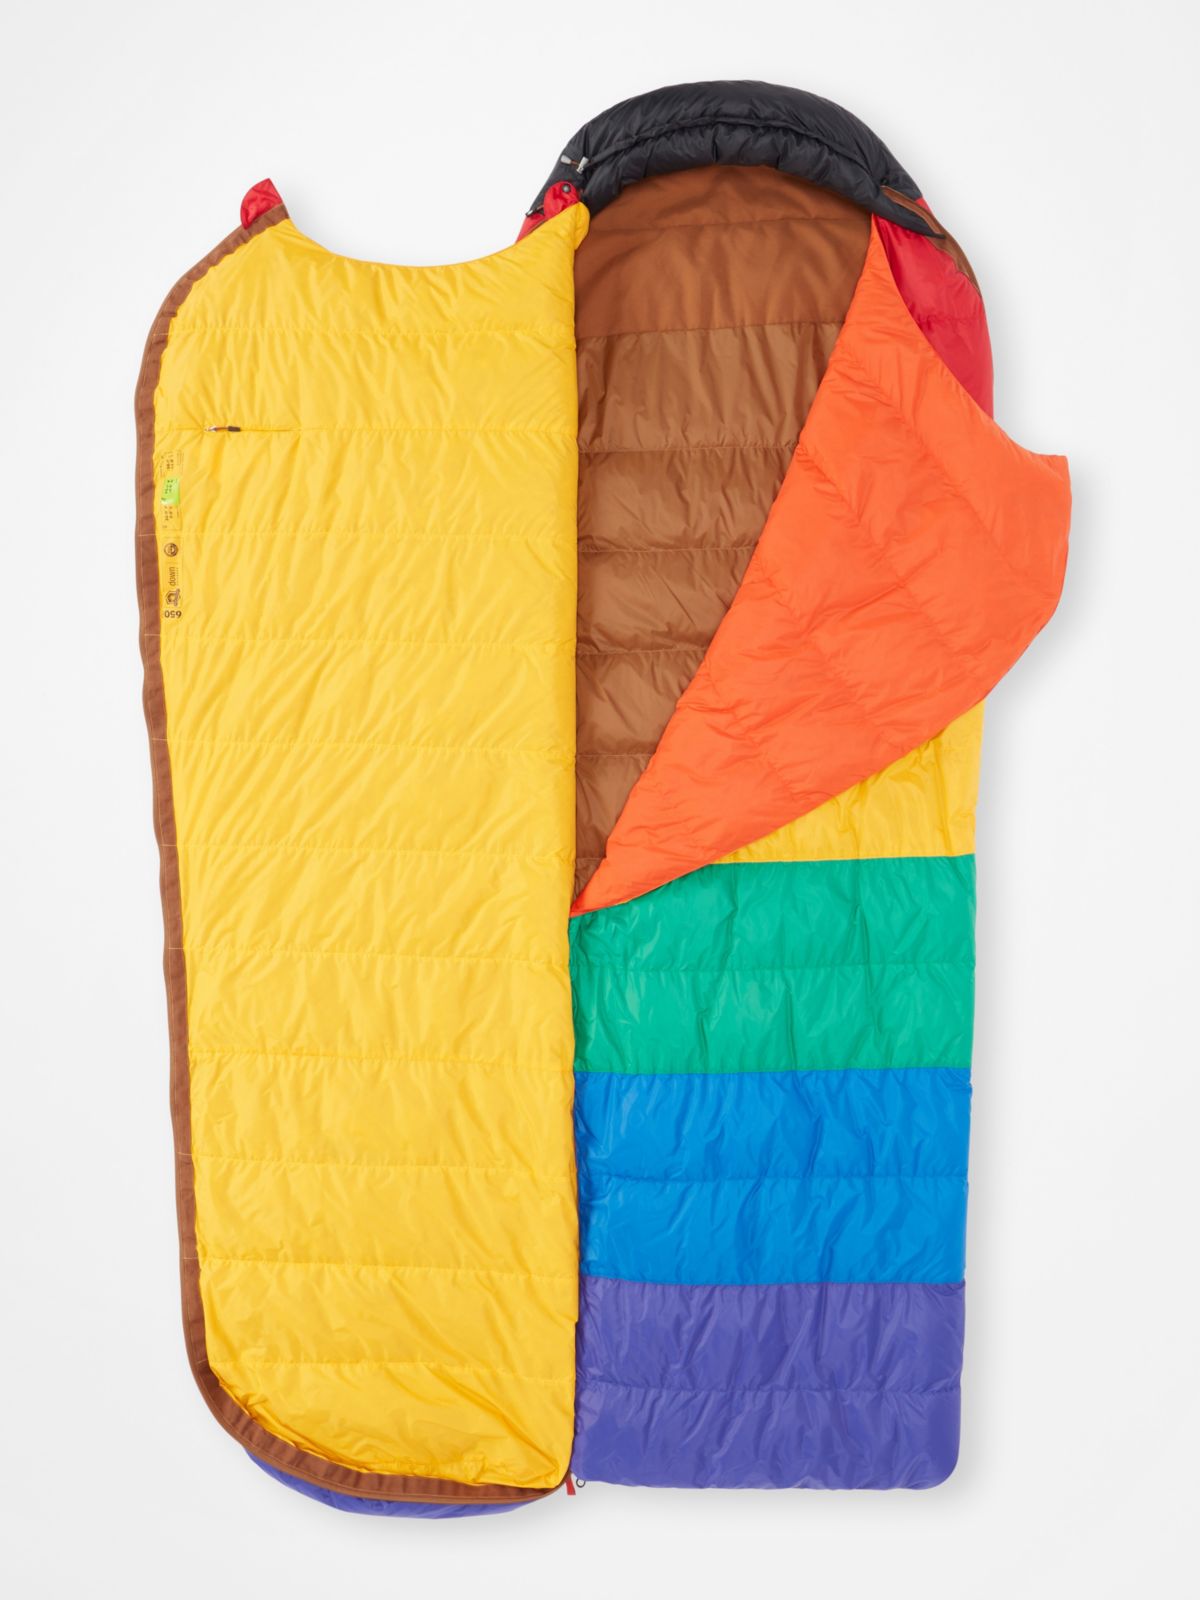 Rainbow Yolla Bolly 30° Sleeping Bag | Marmot